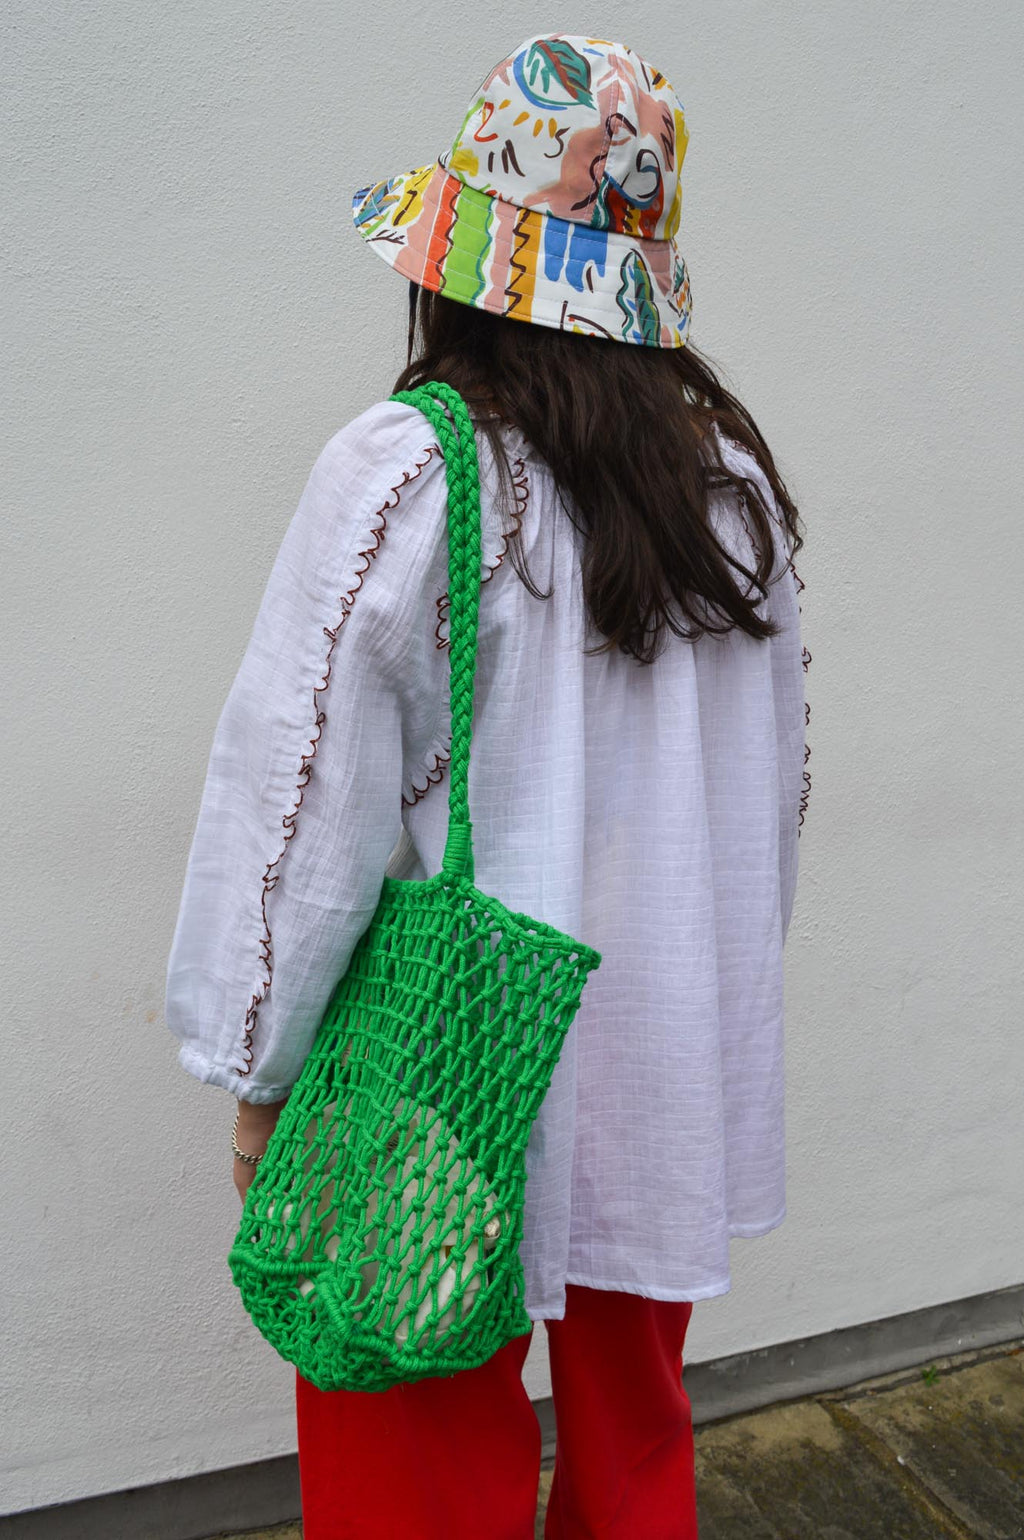 Compania Fantastica Green Shopper Bag